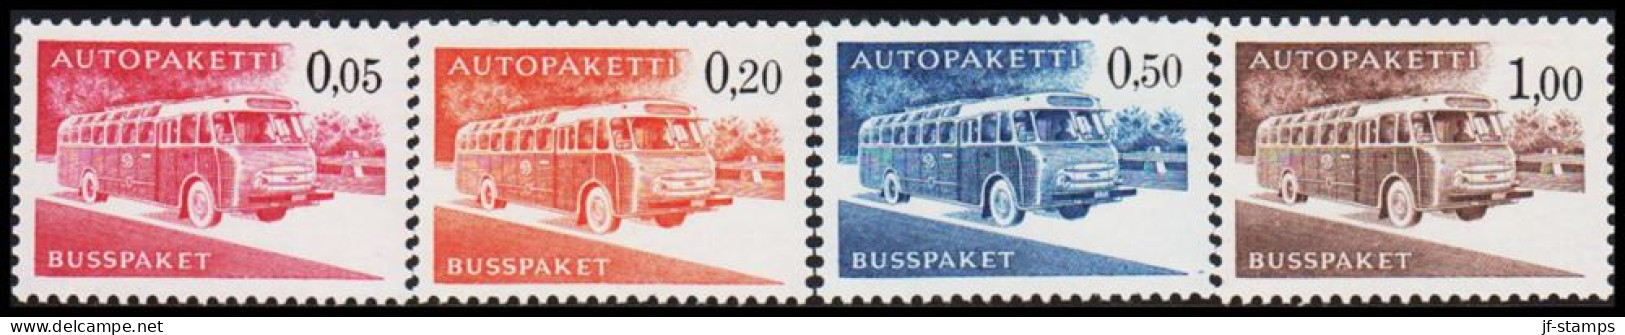 1963-1980. FINLAND. Mail Bus. Complete Set AUTOPAKETTI - BUSSPAKET Never Hinged. Normal... (Michel AP 10-13x) - JF535612 - Postbuspakete